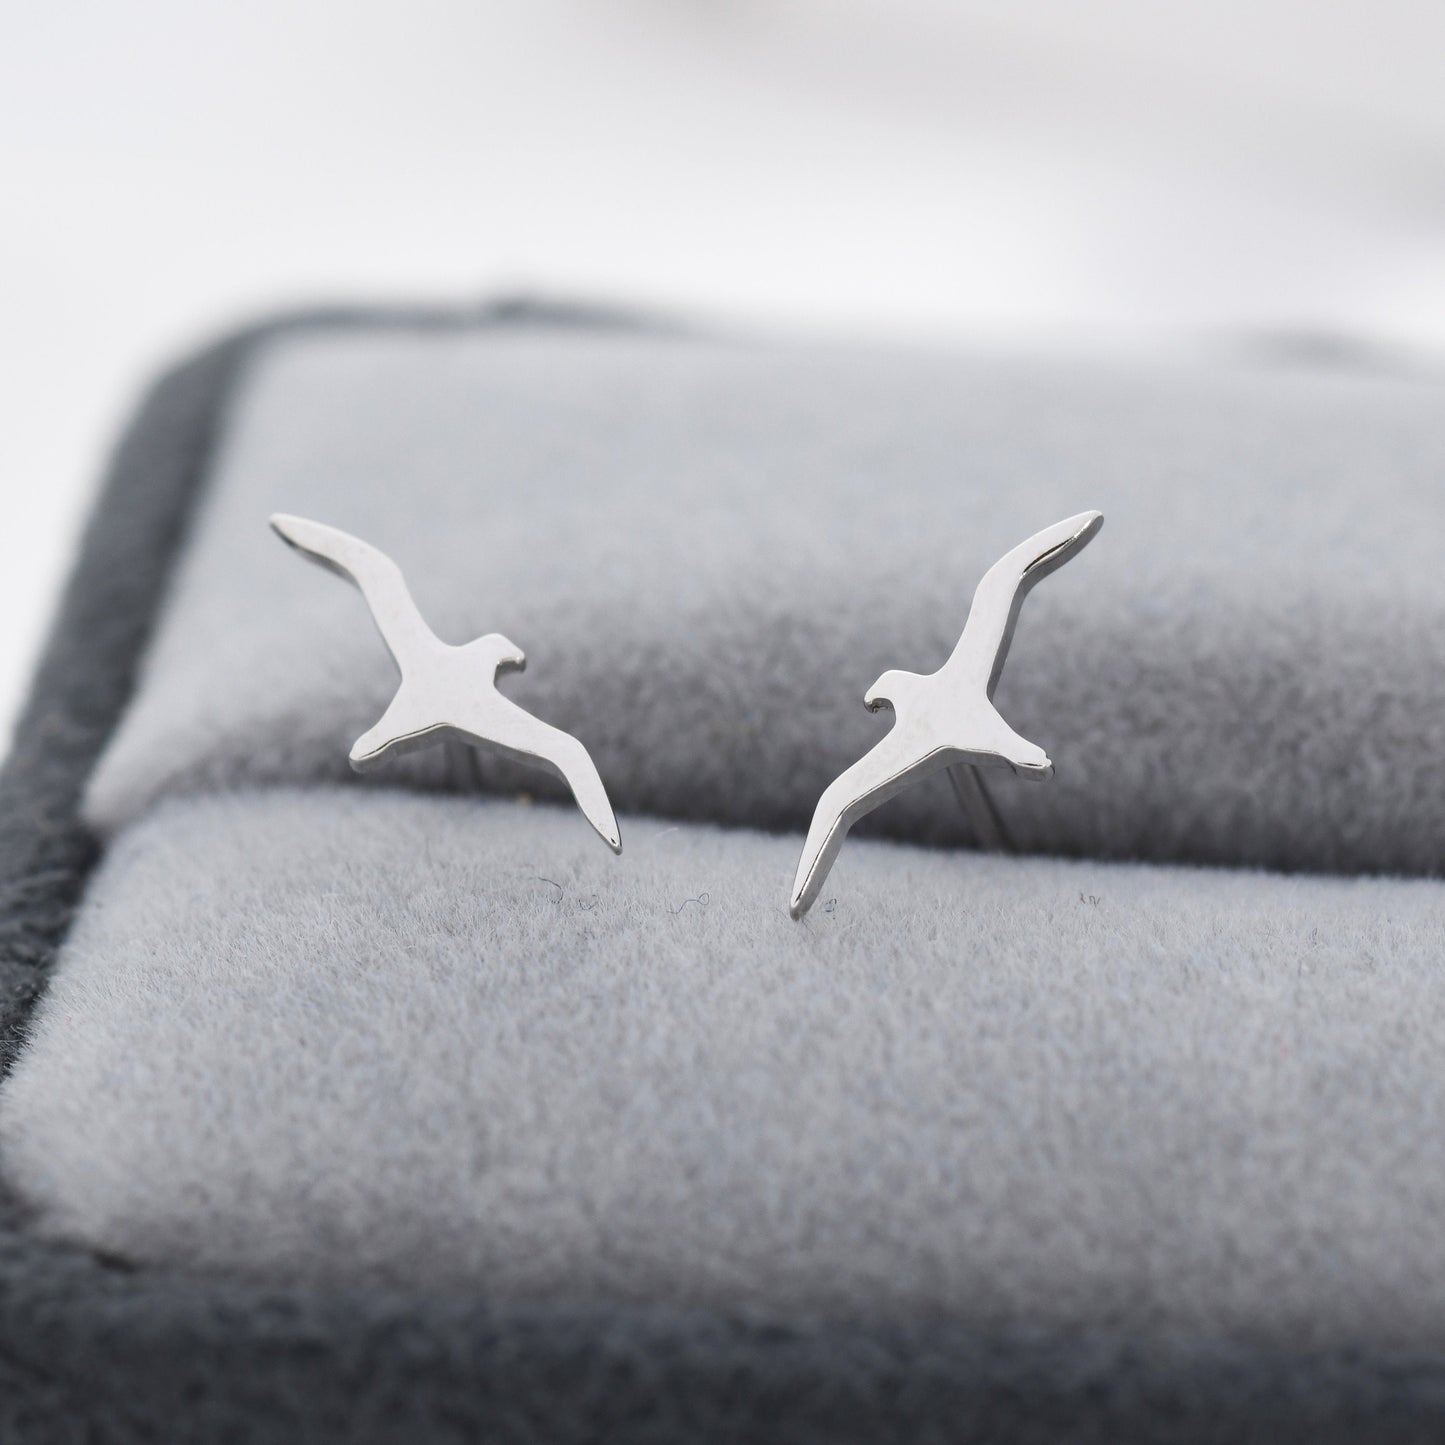 Albatross Bird Stud Earrings in Sterling Silver, Silver or Gold, Seagull Earrings, Flying Bird Earrings, Nature Inspired Animal Earrings